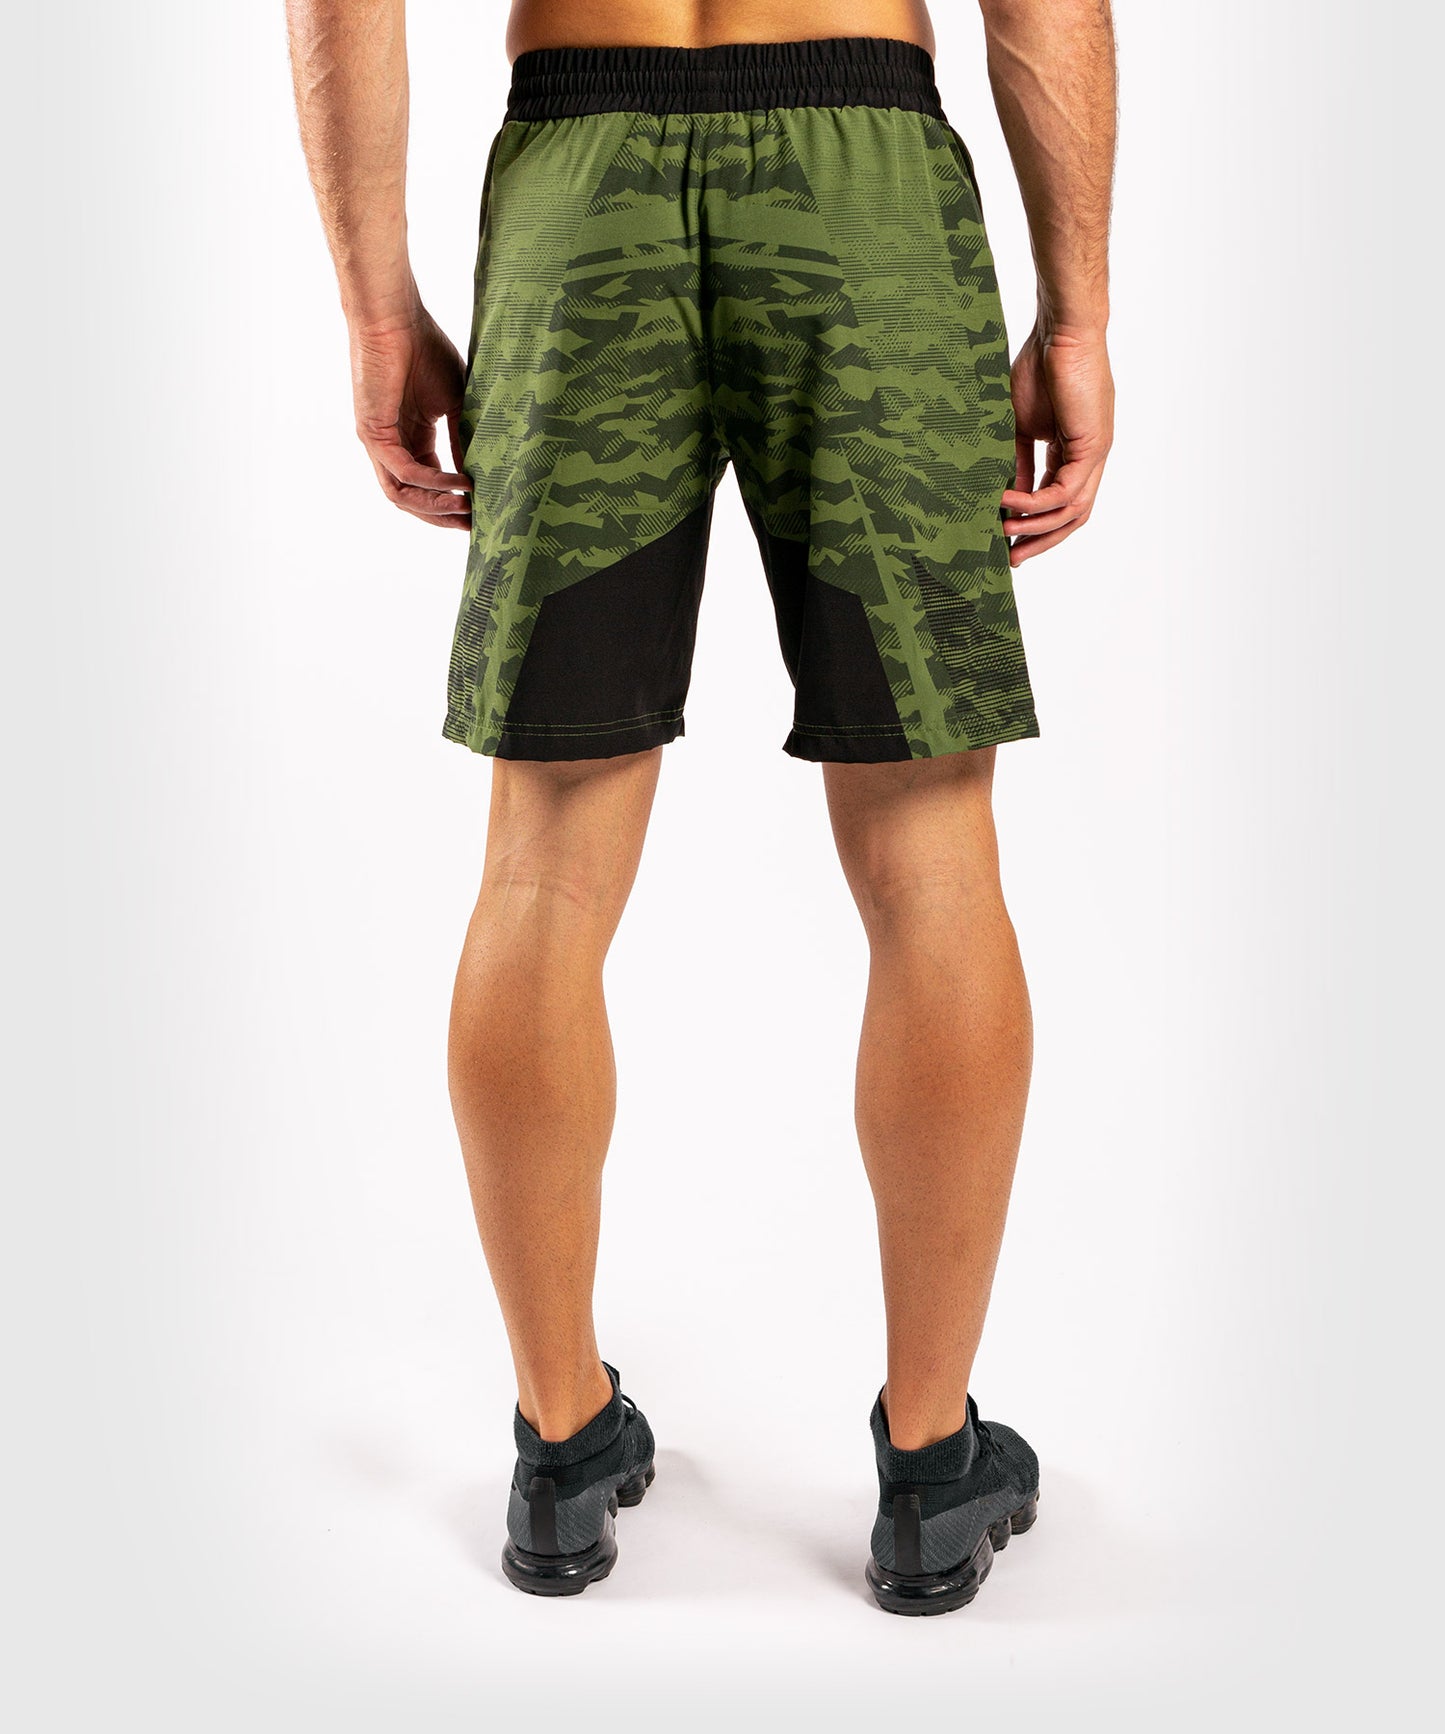 Venum Trooper sport shorts - Forest camo/Black